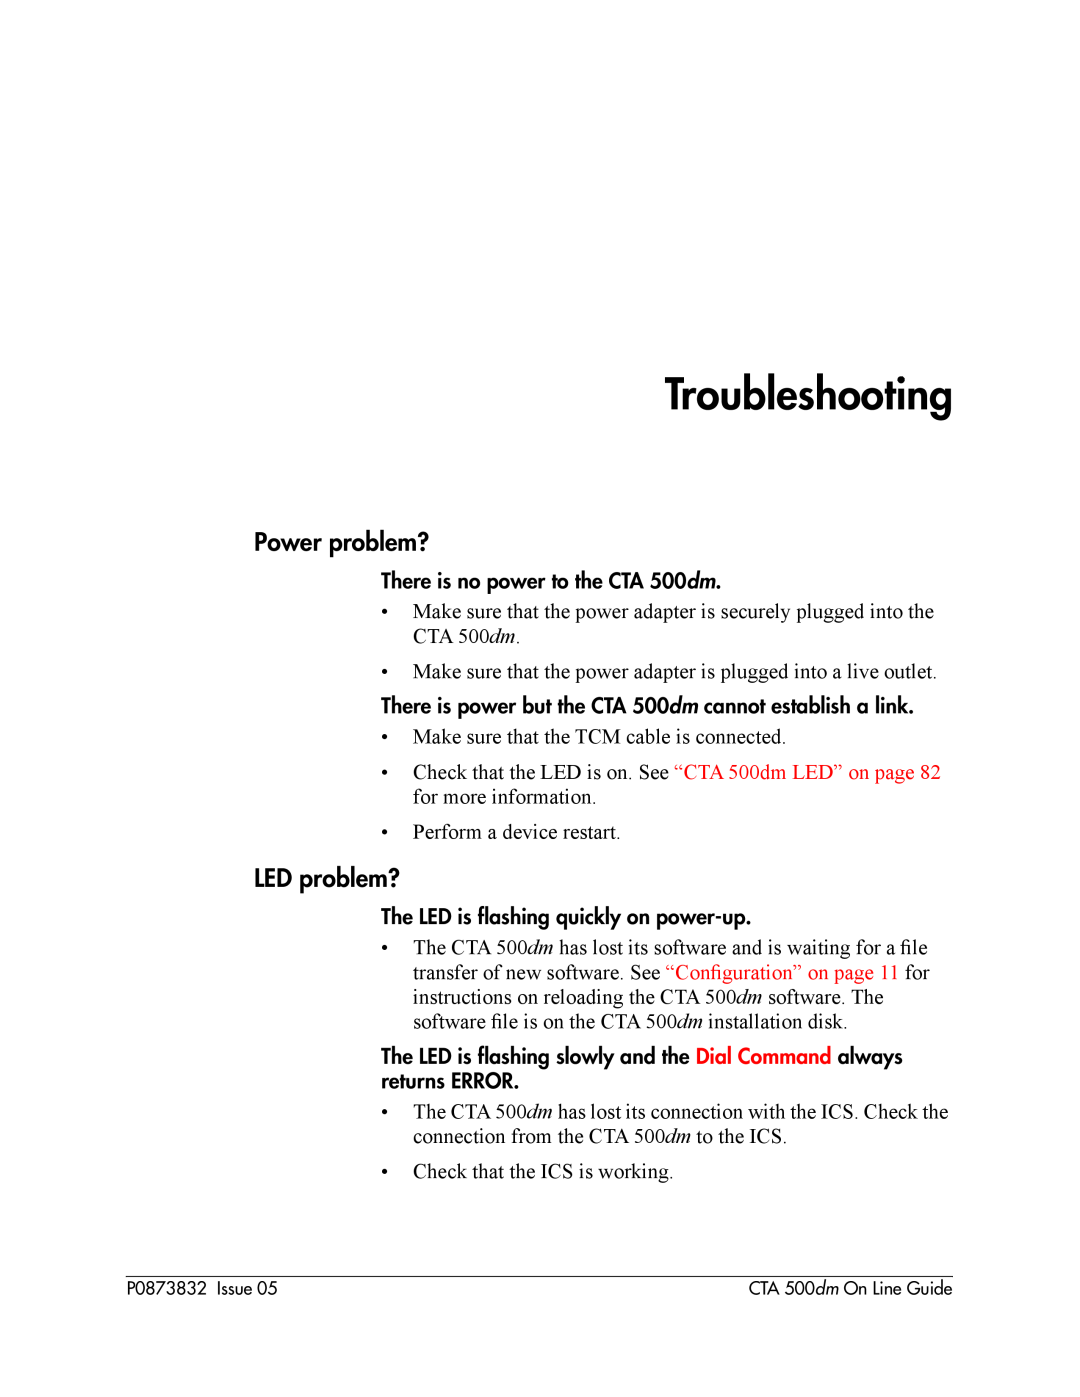 Nortel Networks CTA 500dm manual Troubleshooting, Power problem?, LED problem? 